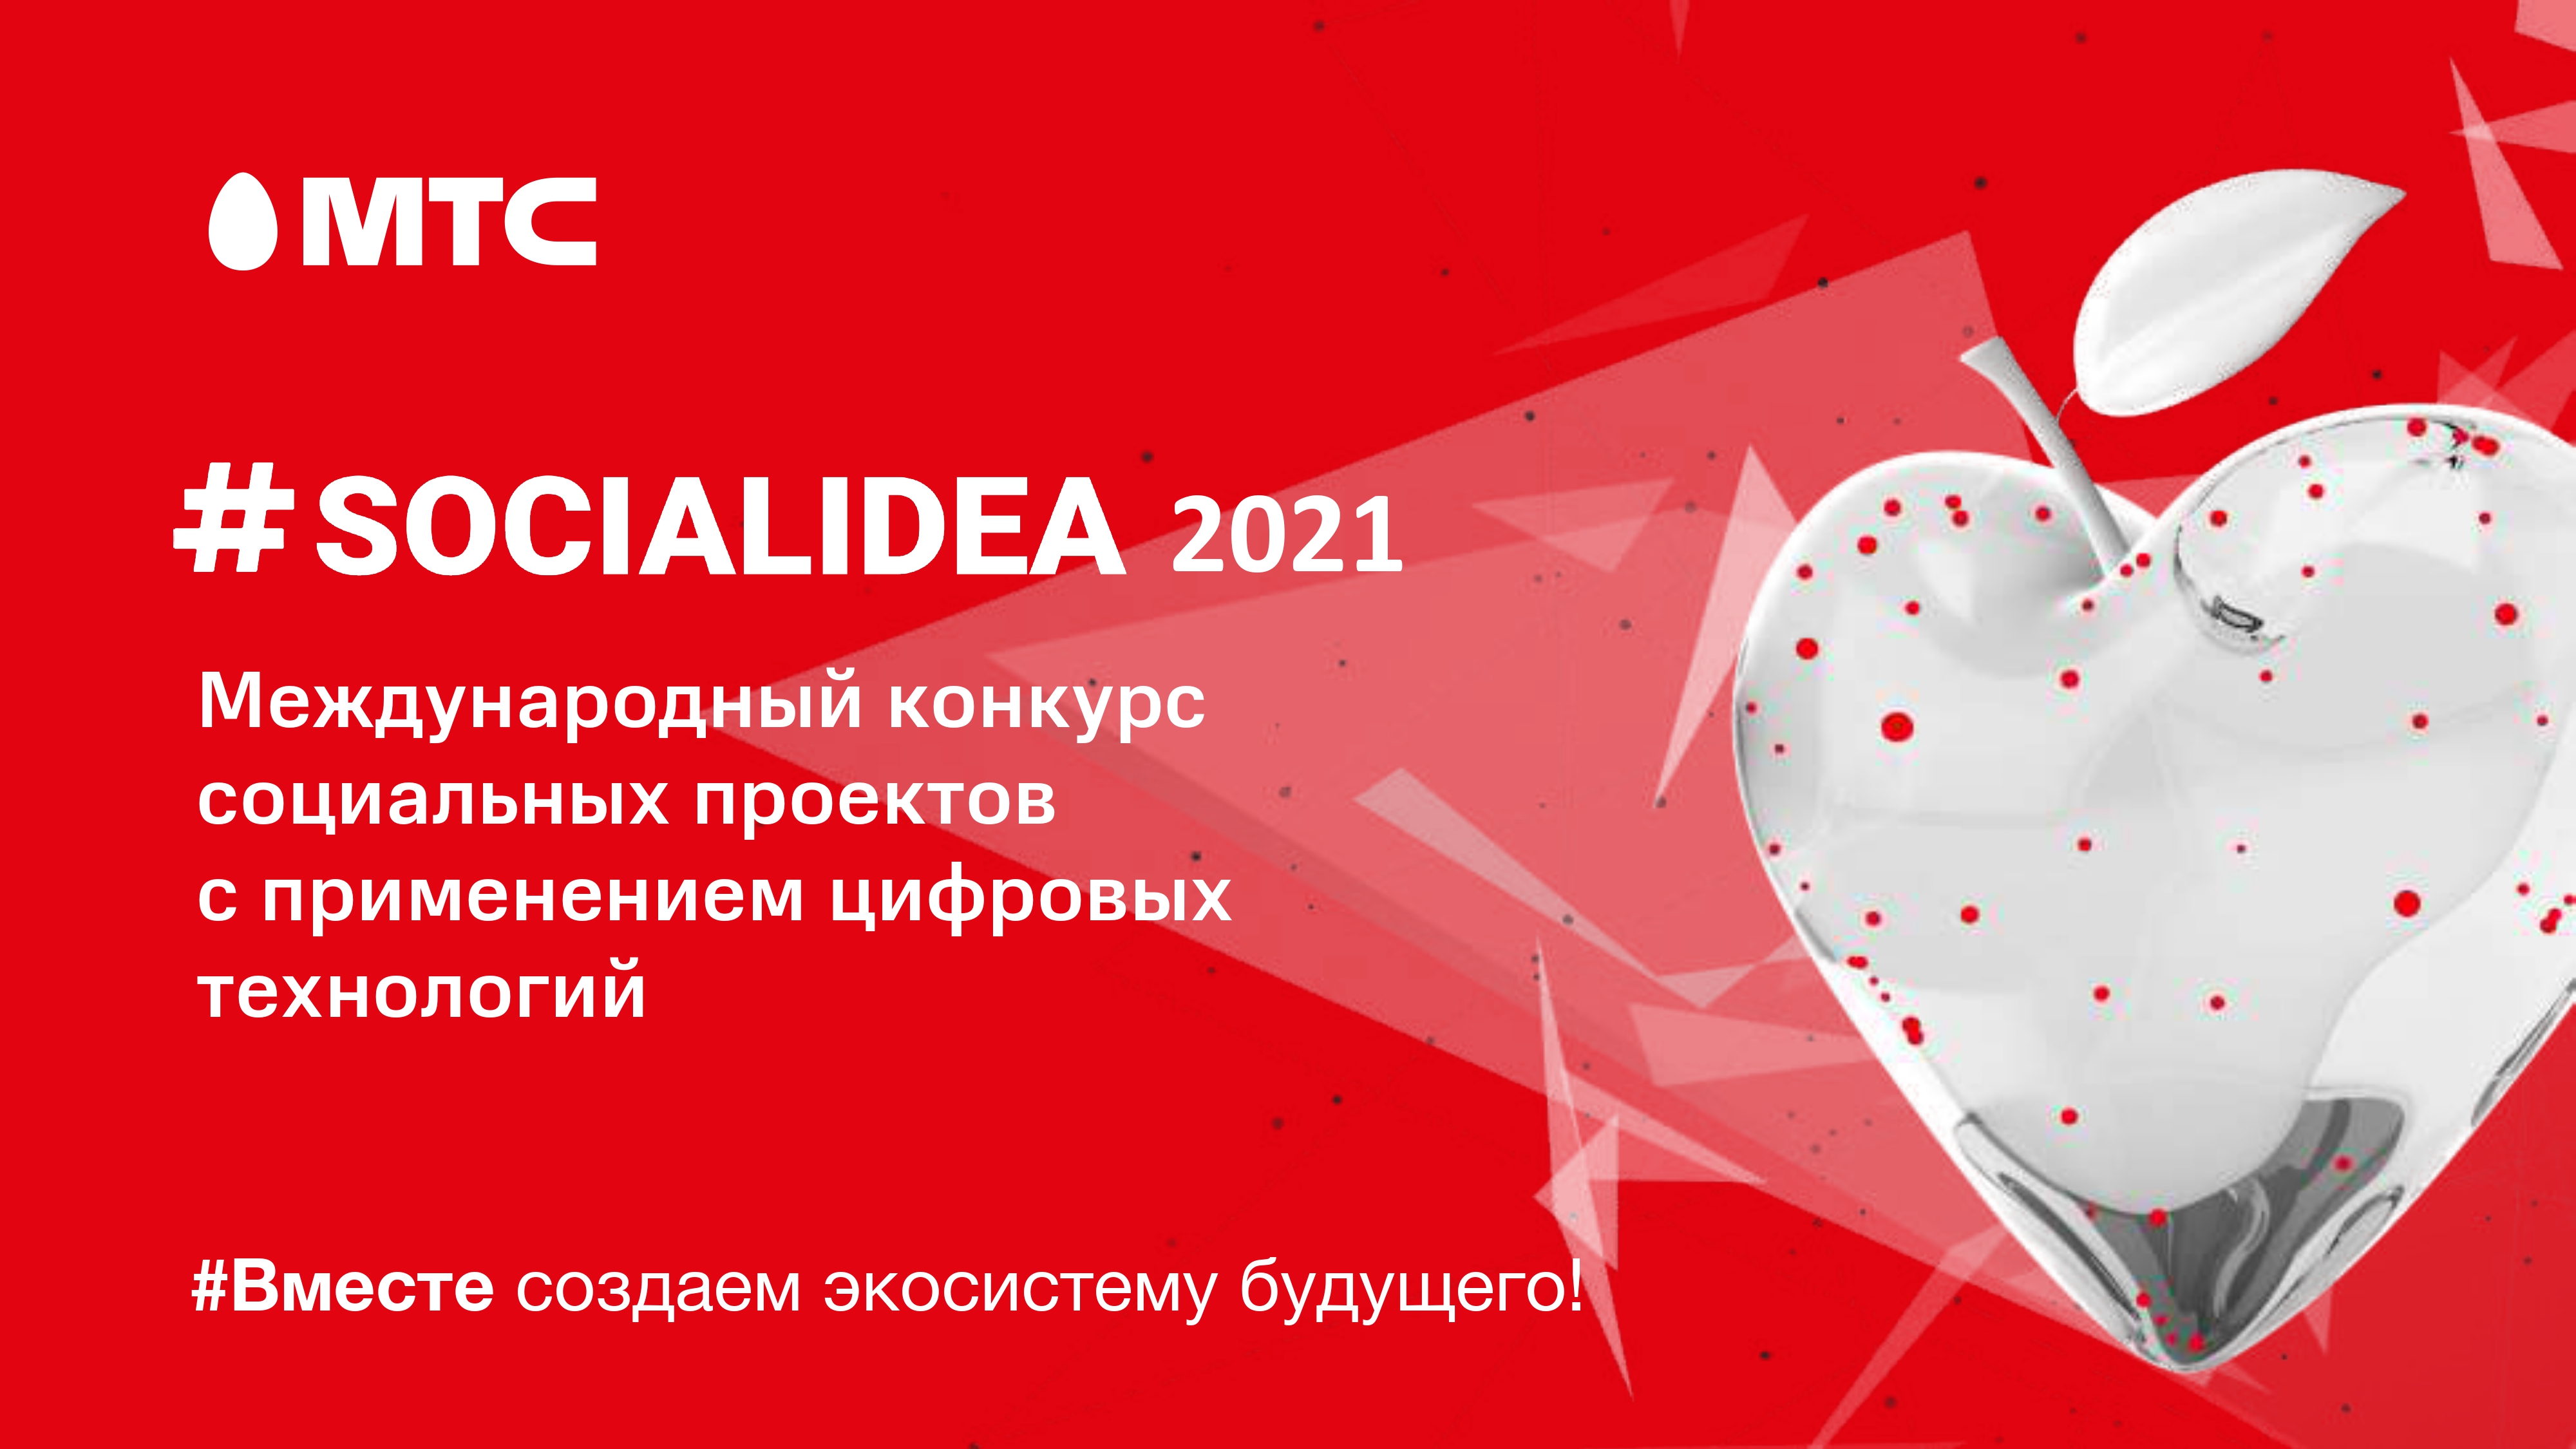      Social Idea 2021  